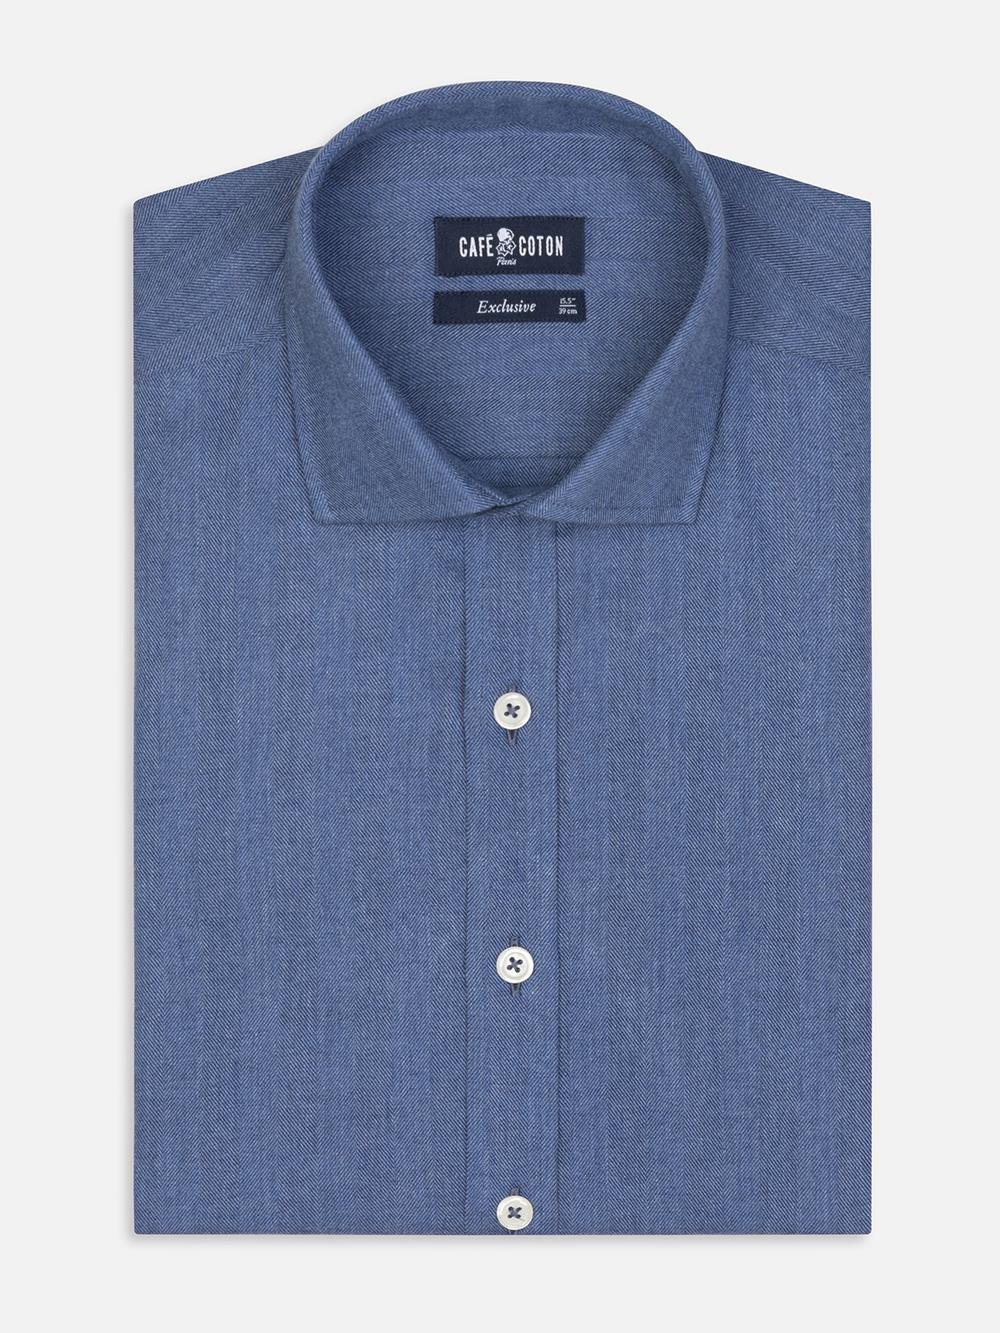 Hall blue flannel shirt